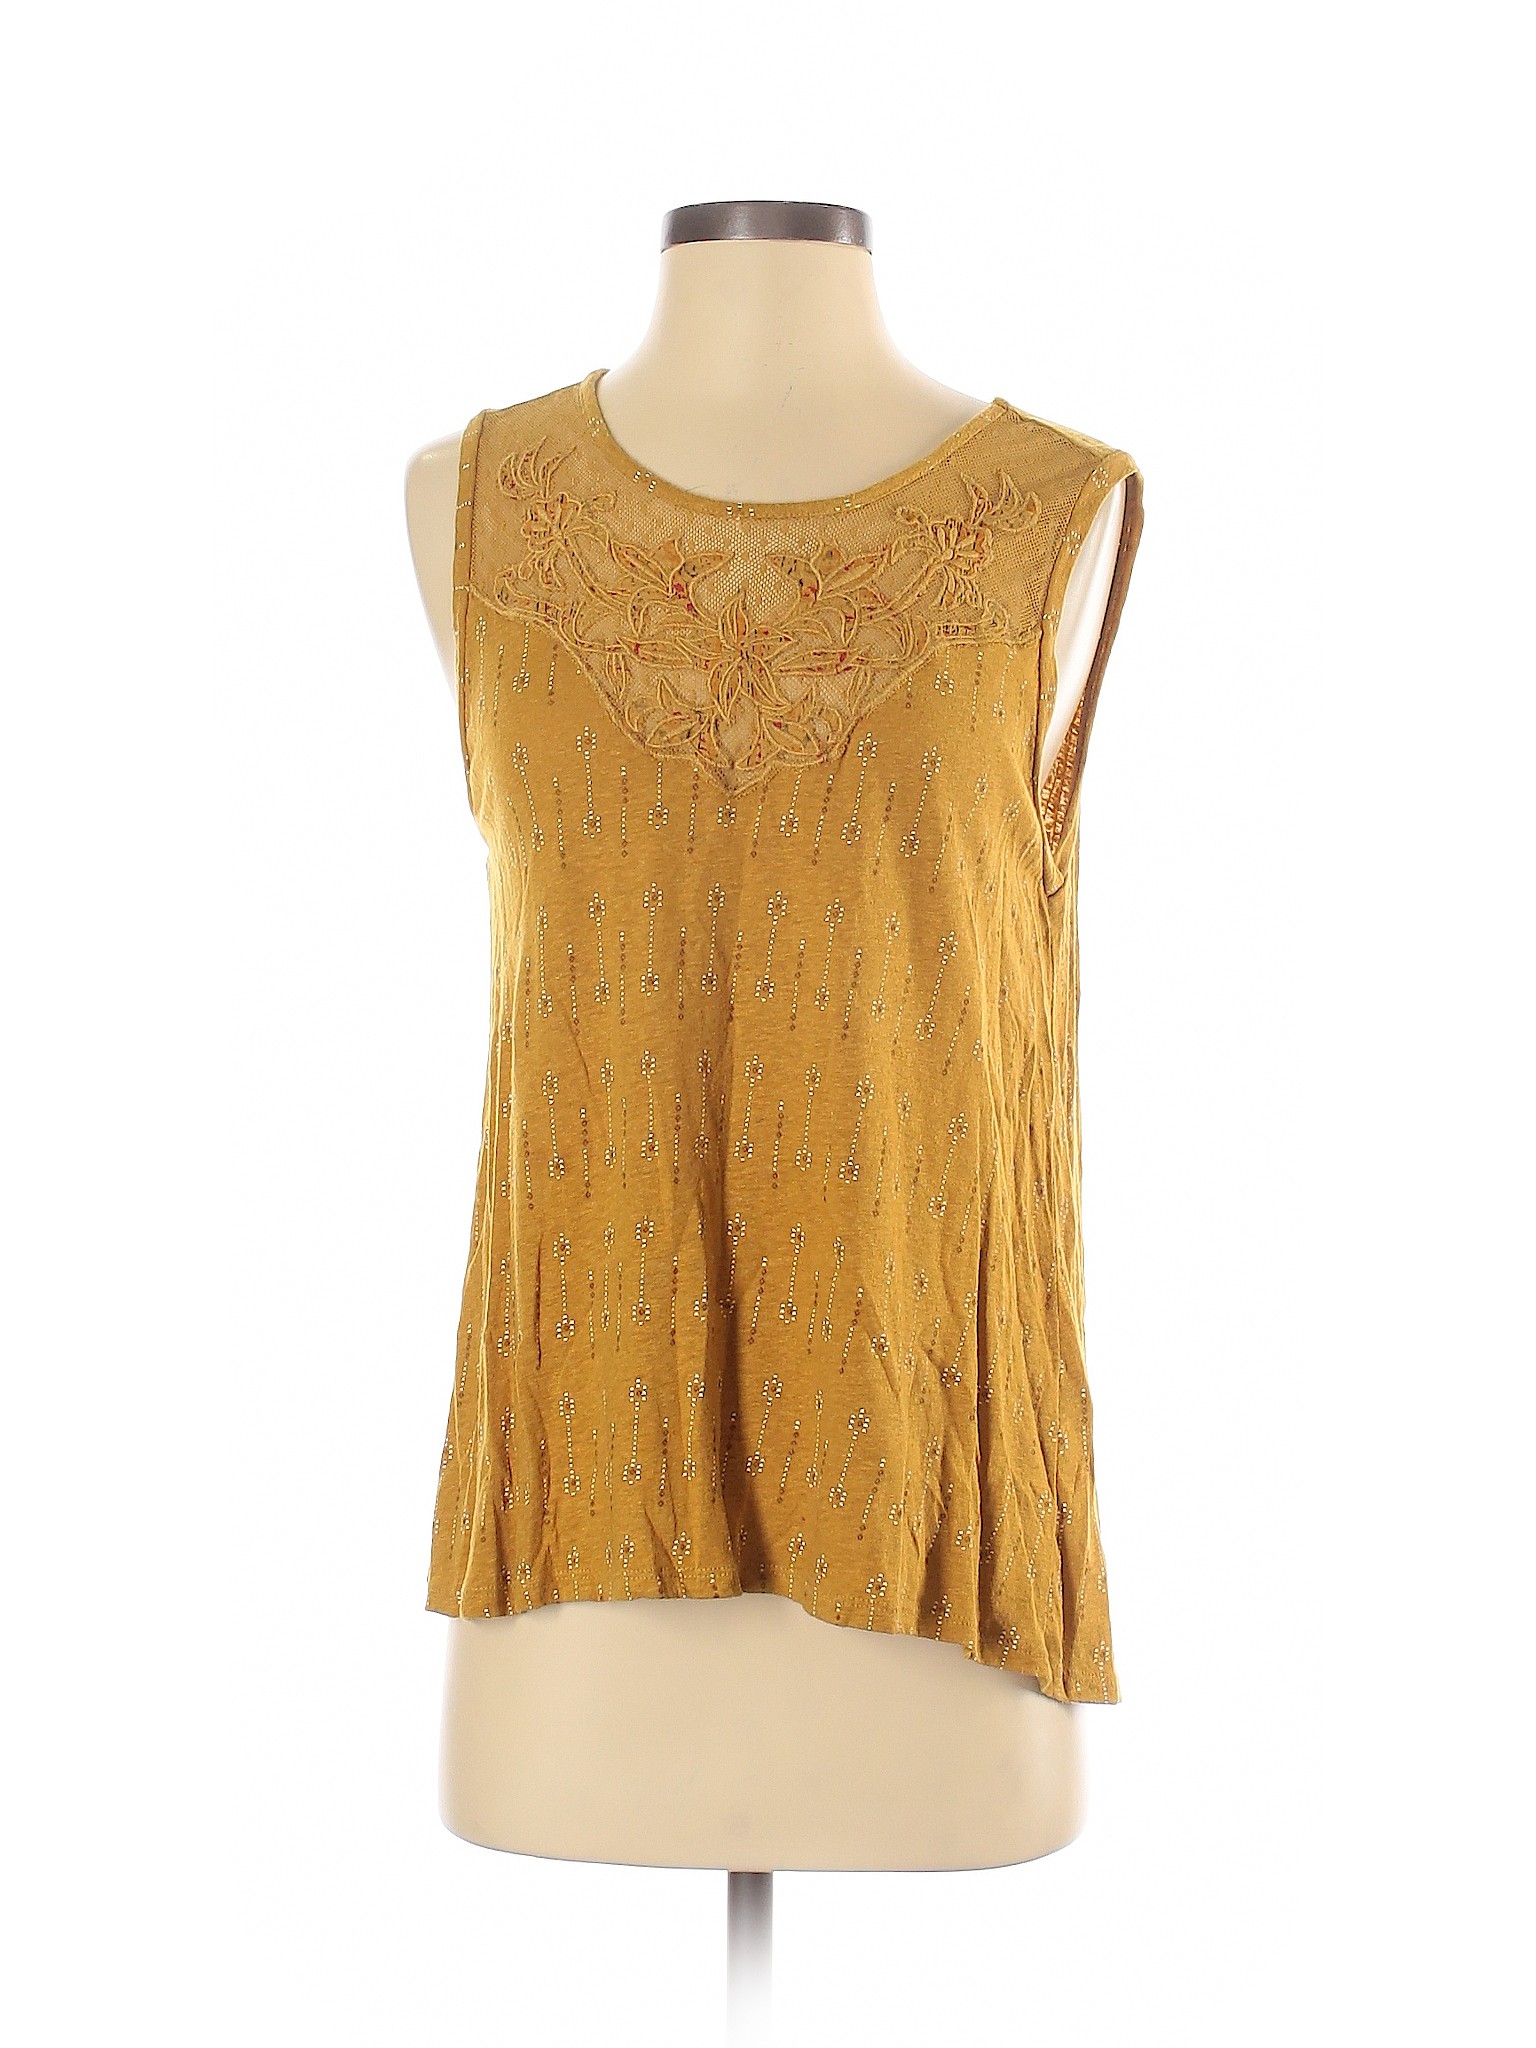 Lucky Brand Women Yellow Sleeveless Top S | eBay